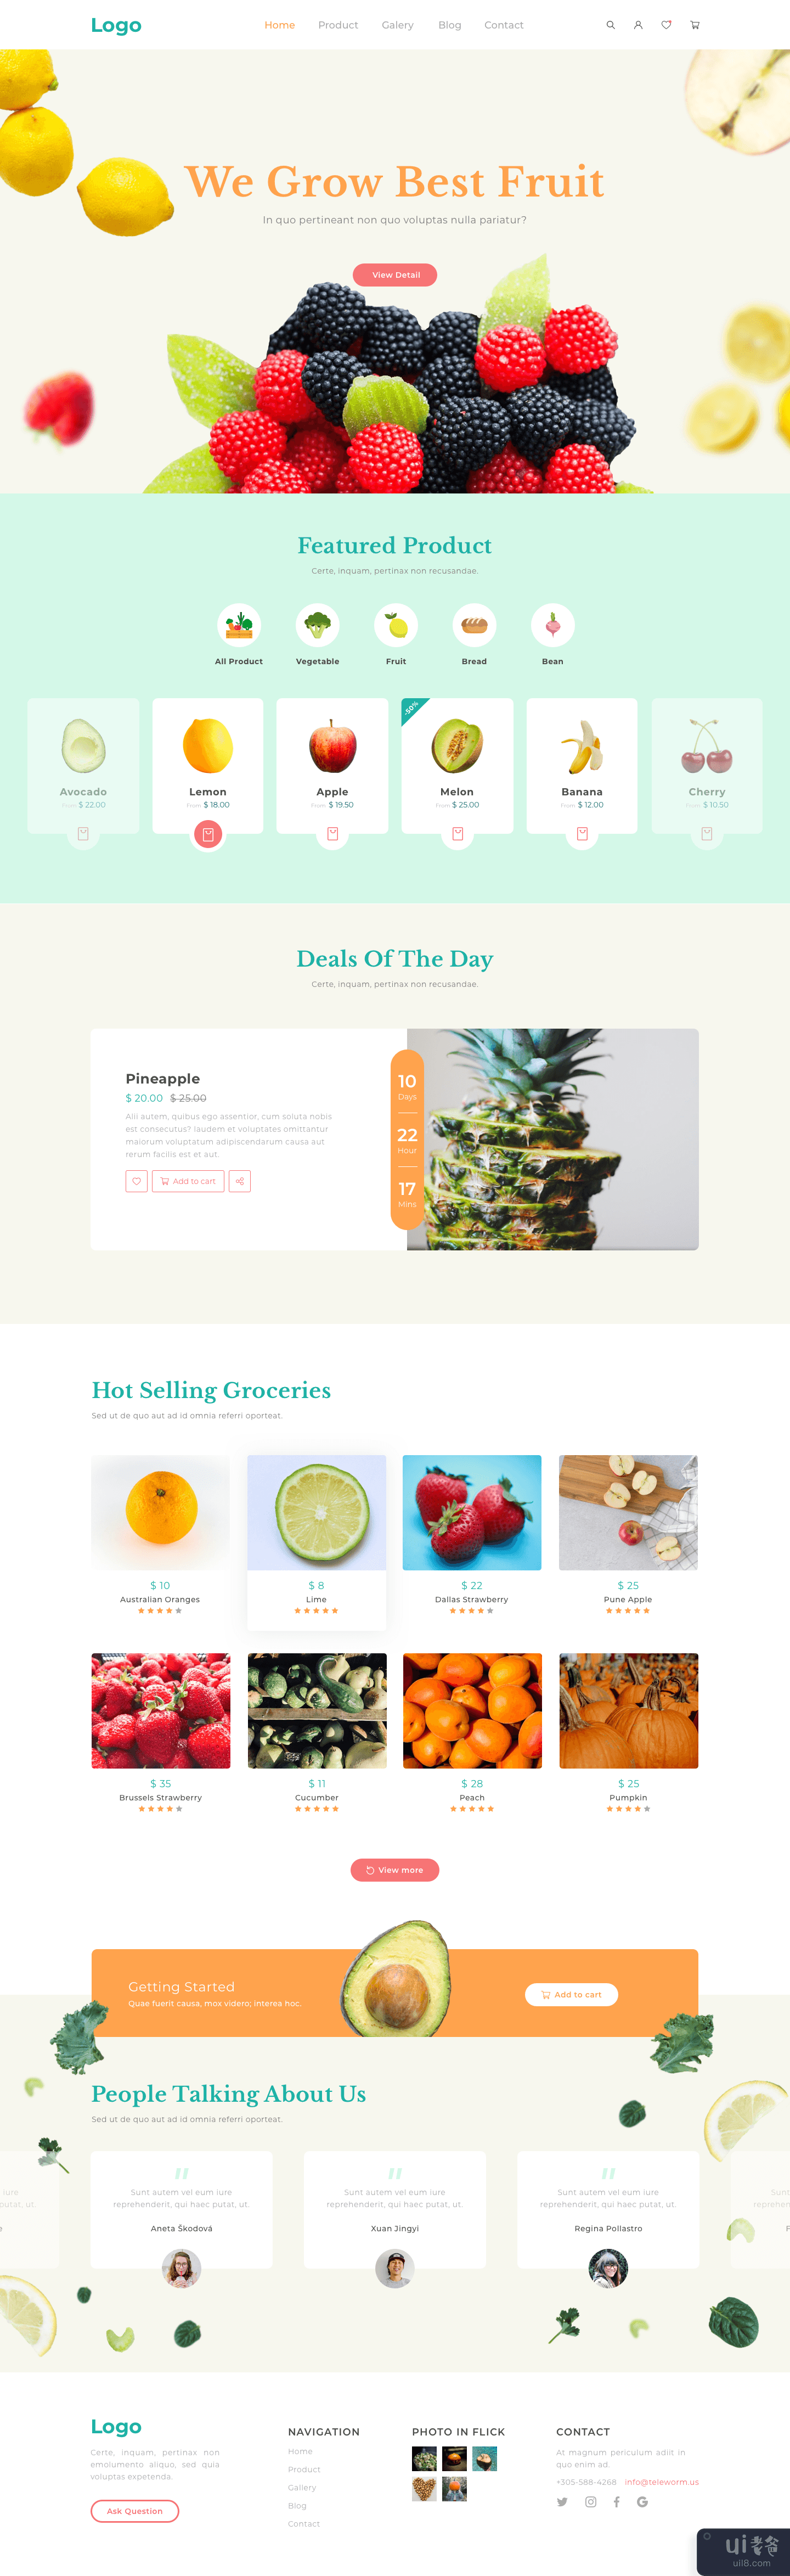 水果店登陆页面模板(Fruit shop landing page template)插图